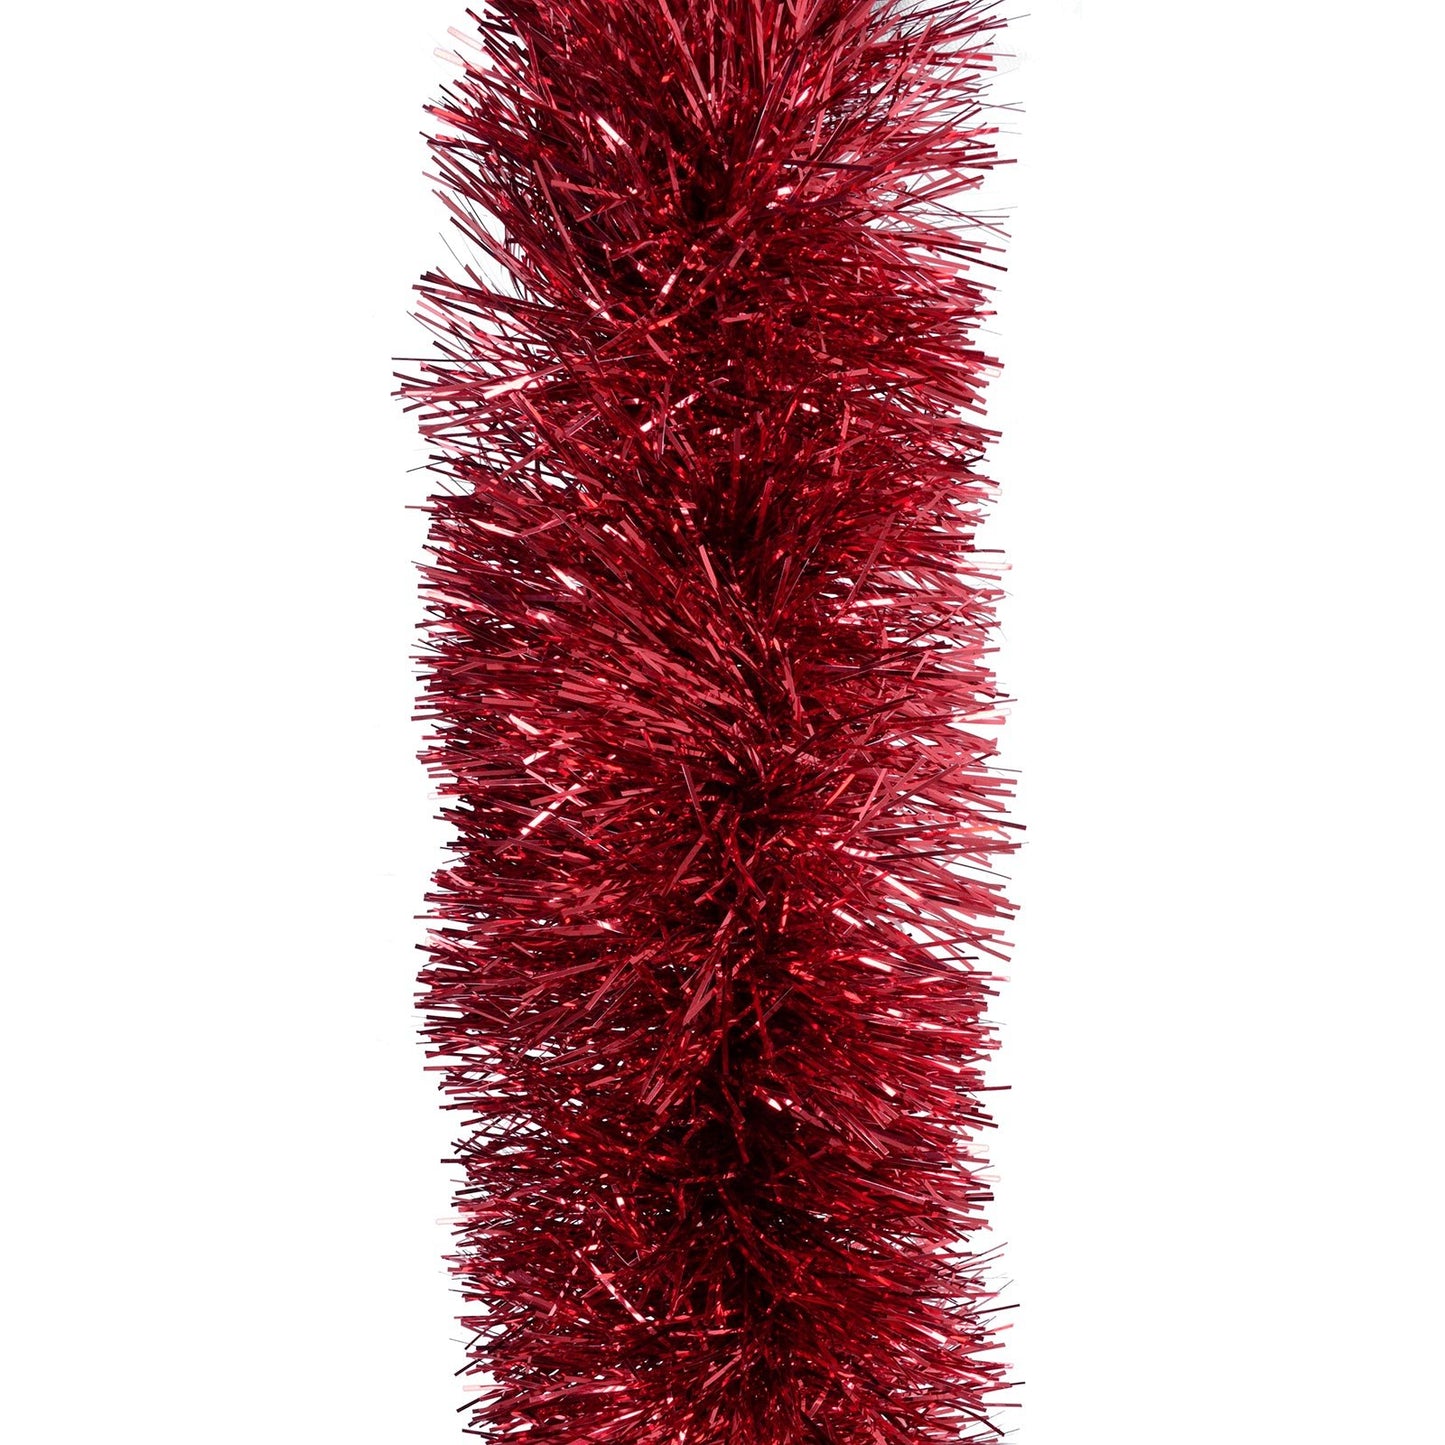 Mr Crimbo Luxury Christmas Tinsel 2m Lengths Various Colours - MrCrimbo.co.uk -XS6546 - Red -christmas tinsel